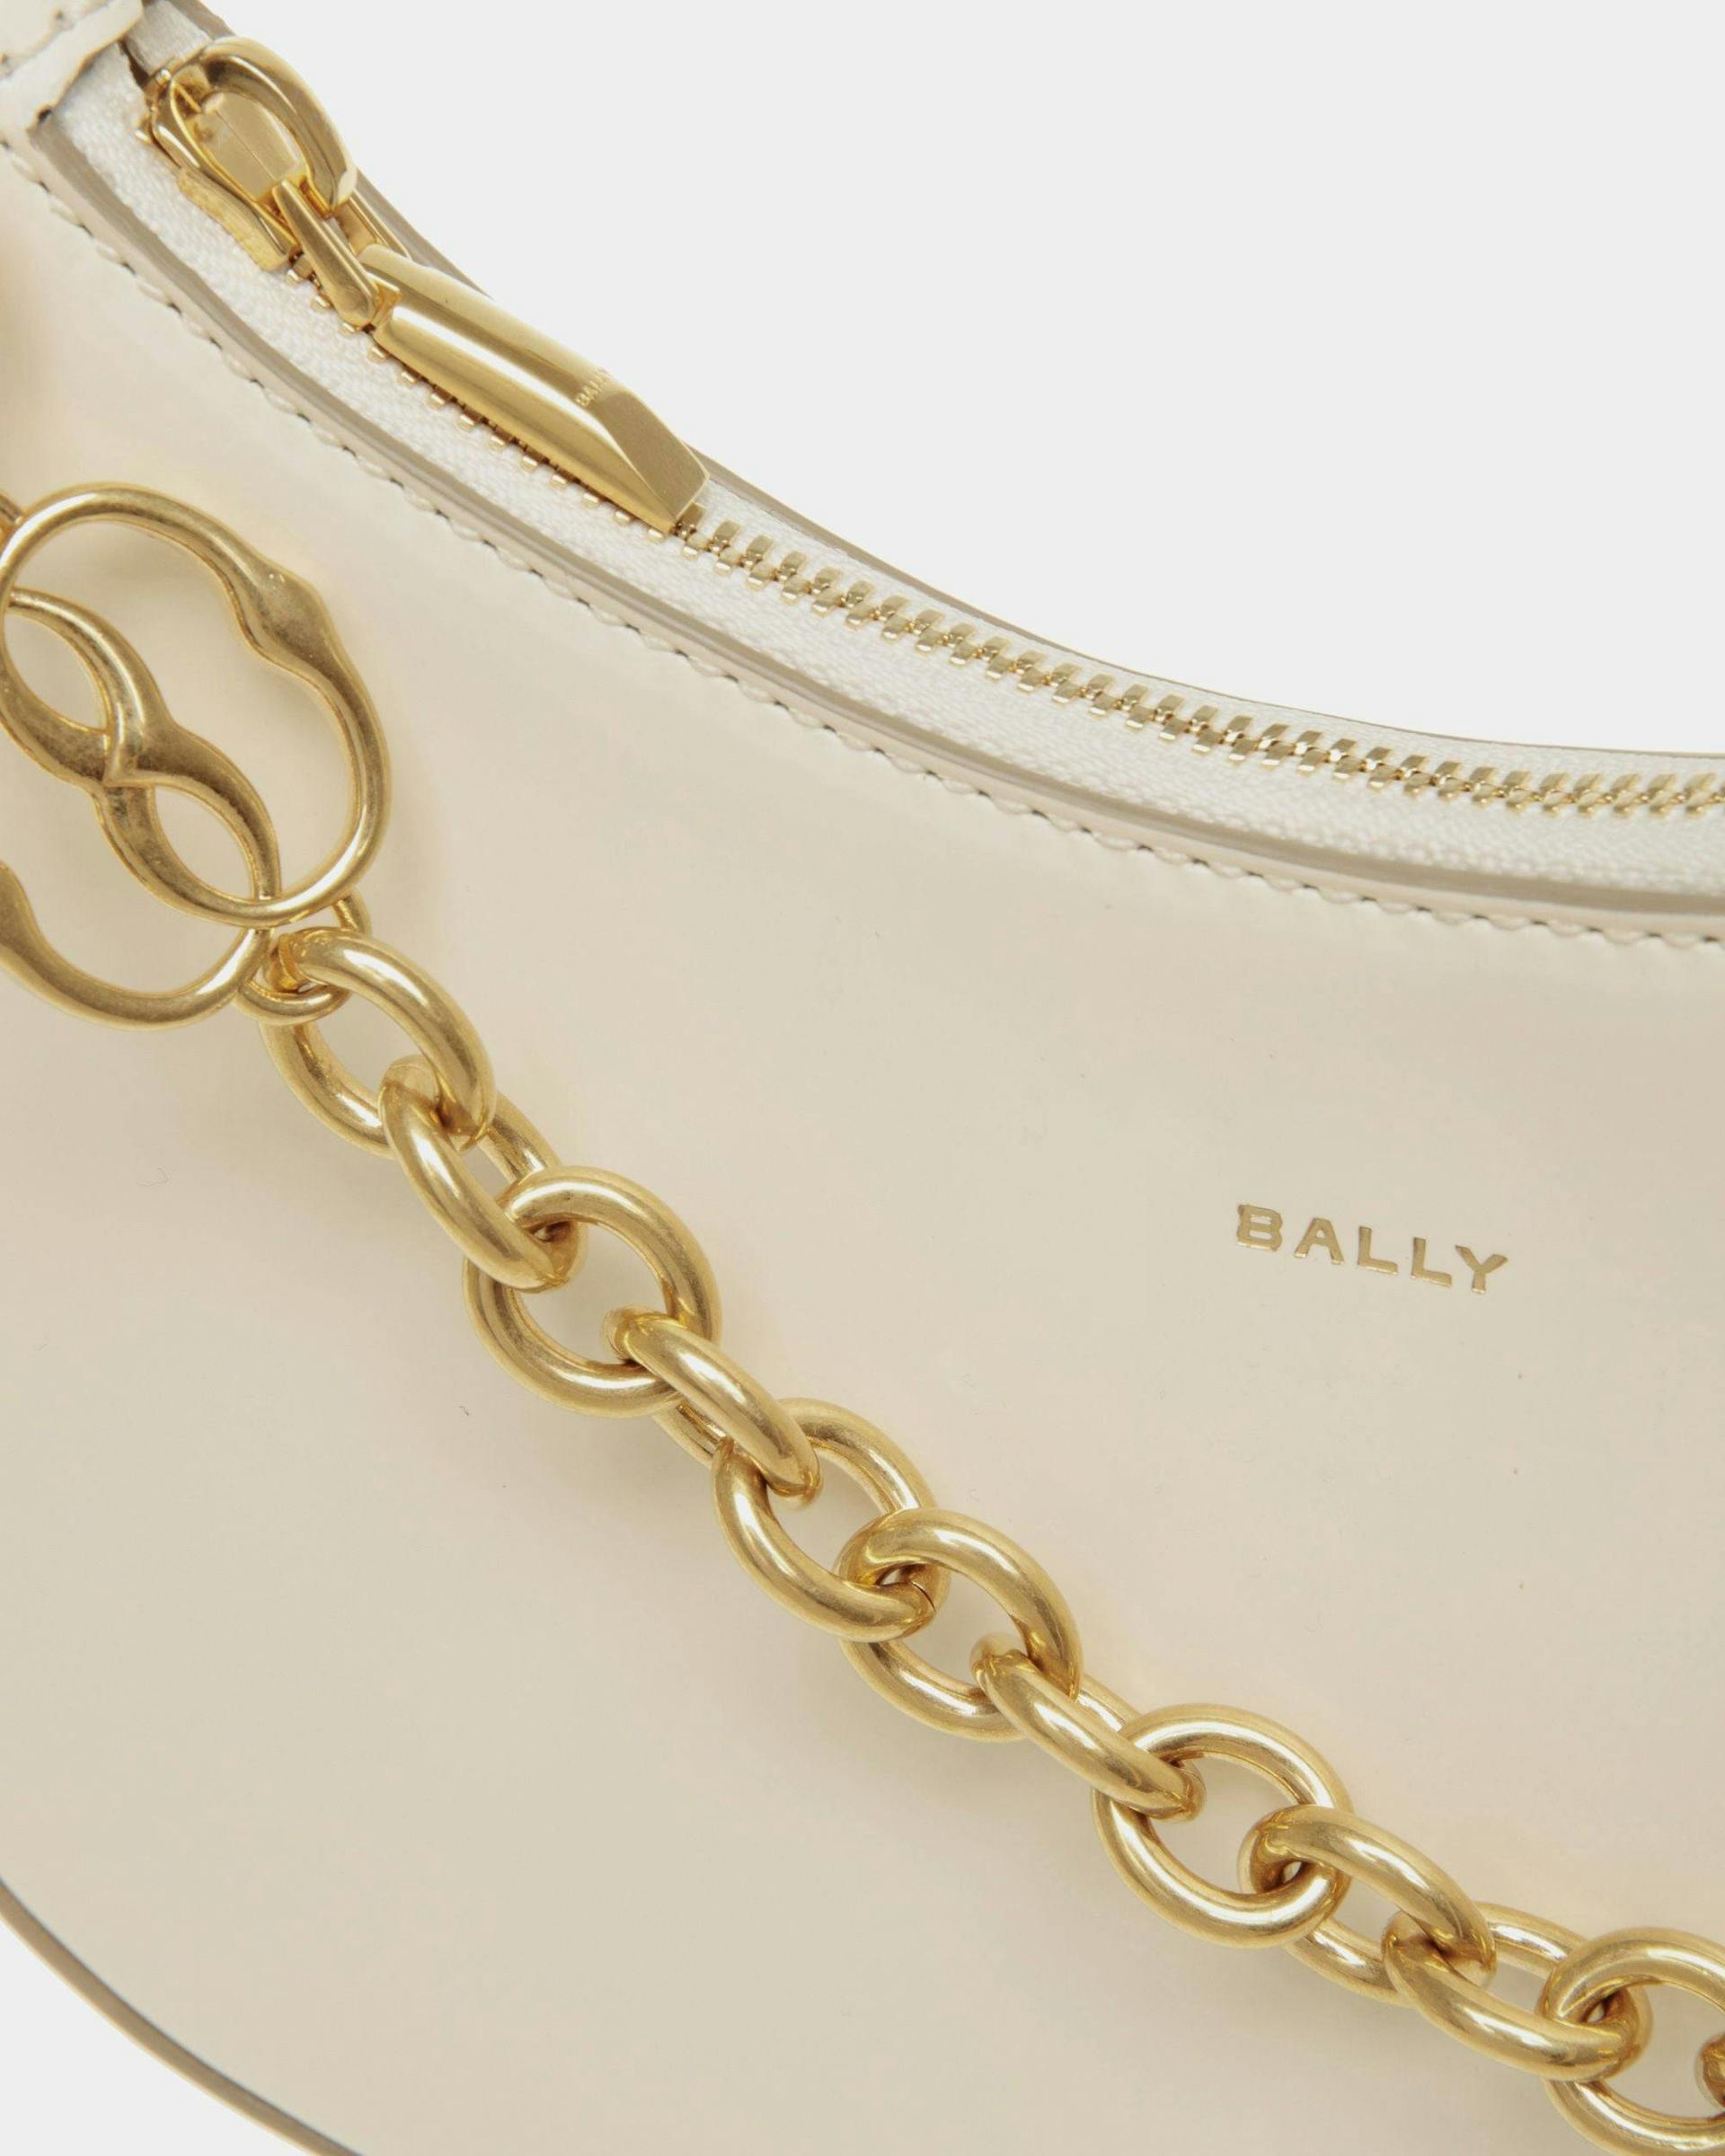 Women's Emblem Mini Crossbody Bag In White Patent Leather | Bally | Still Life Detail